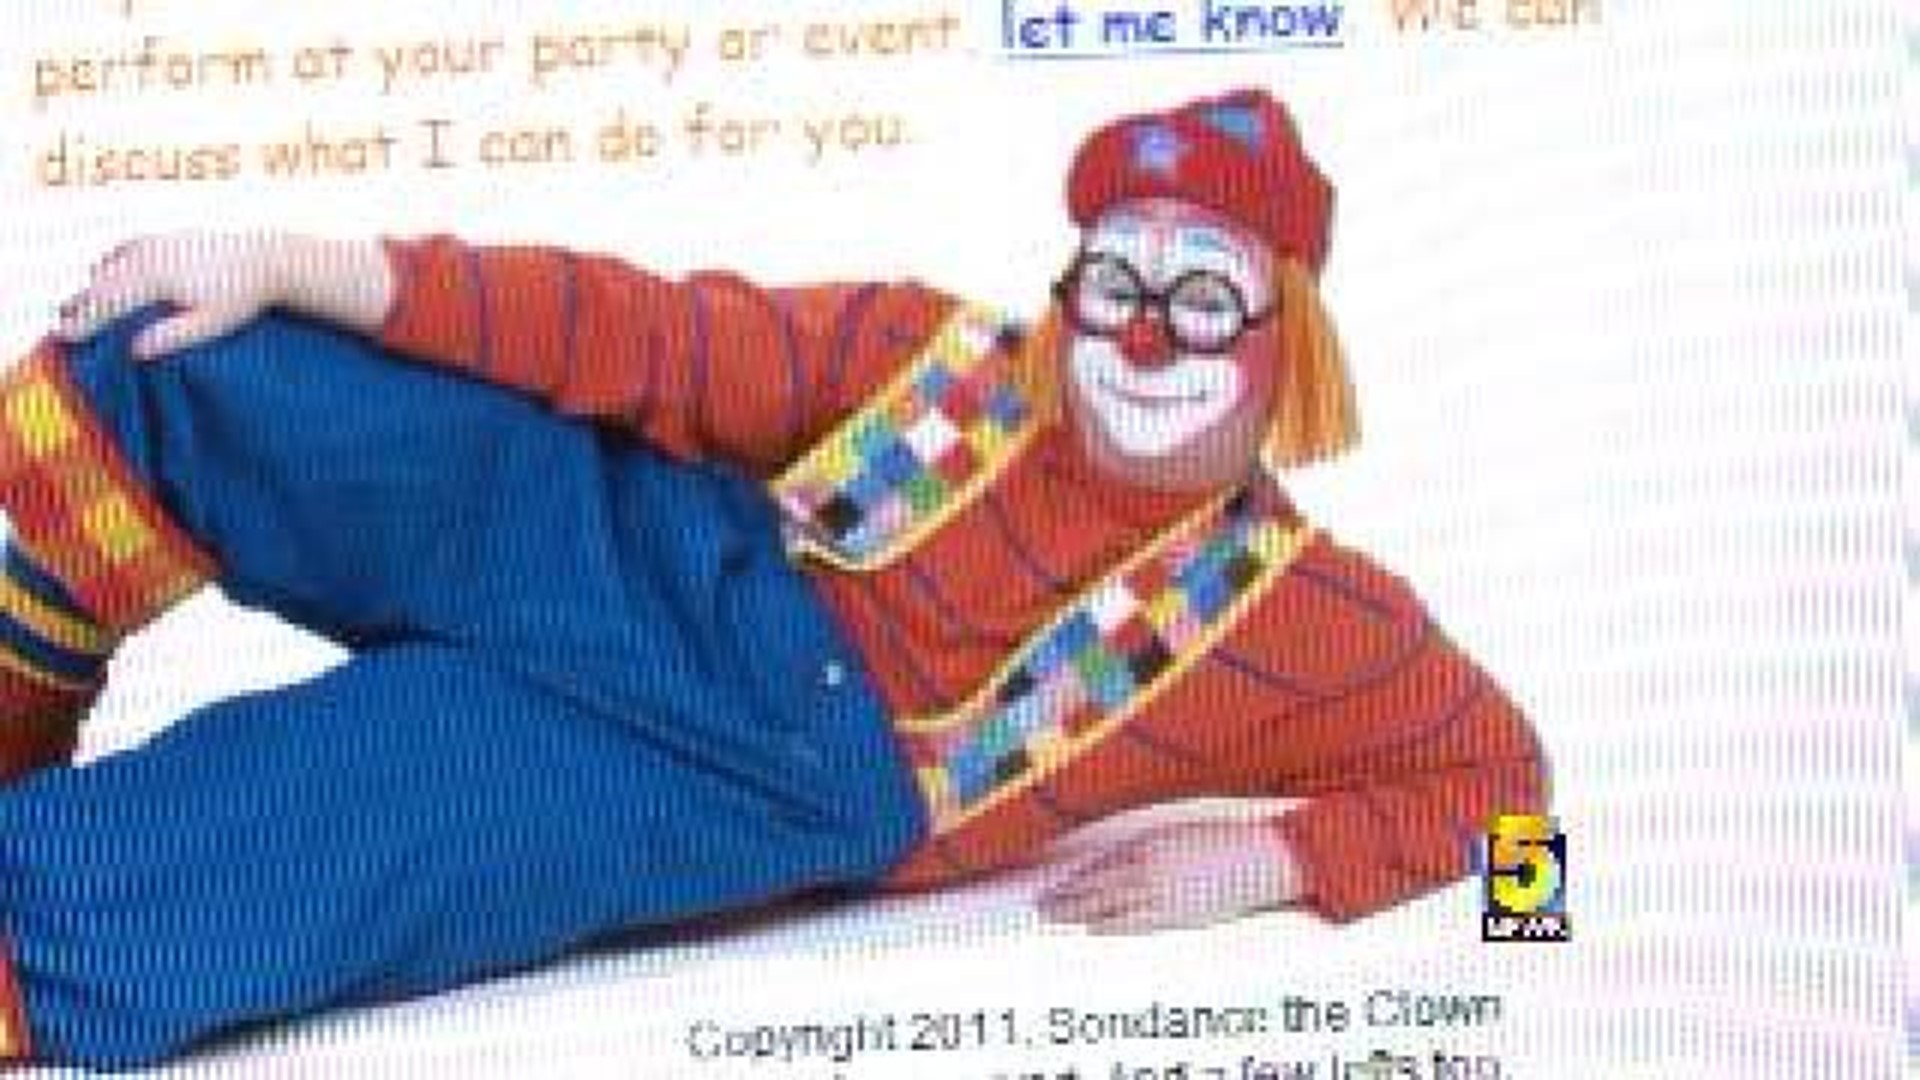 1920px x 1080px - Sondance The Clown Pleads Guilty To Child Porn Charge | 5newsonline.com